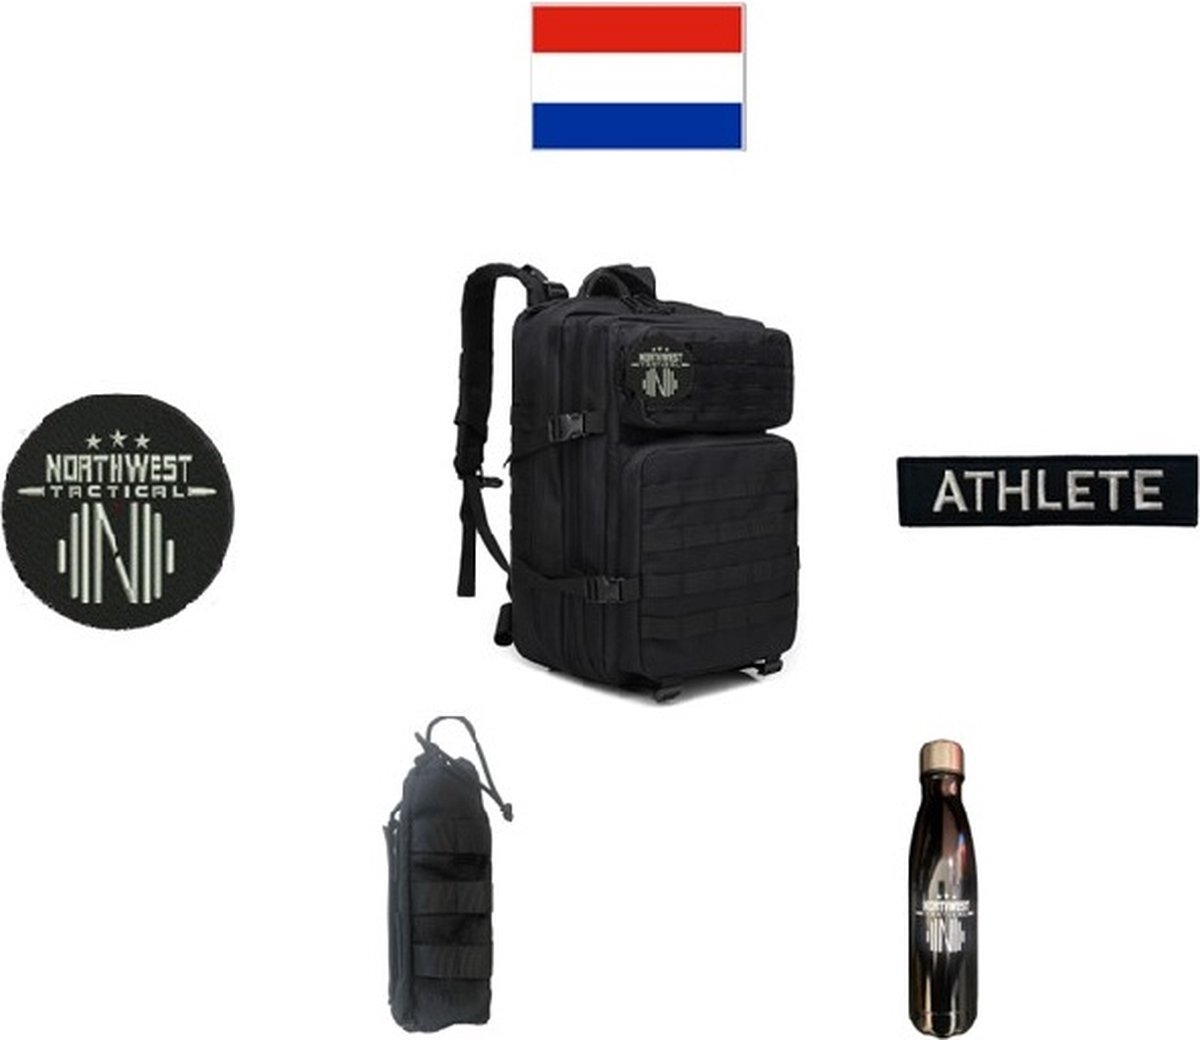 Northwest Tactical Backpack | Tactische rugzak | sport - werk | Zwart | SPECIAL EDITION ATHLETE